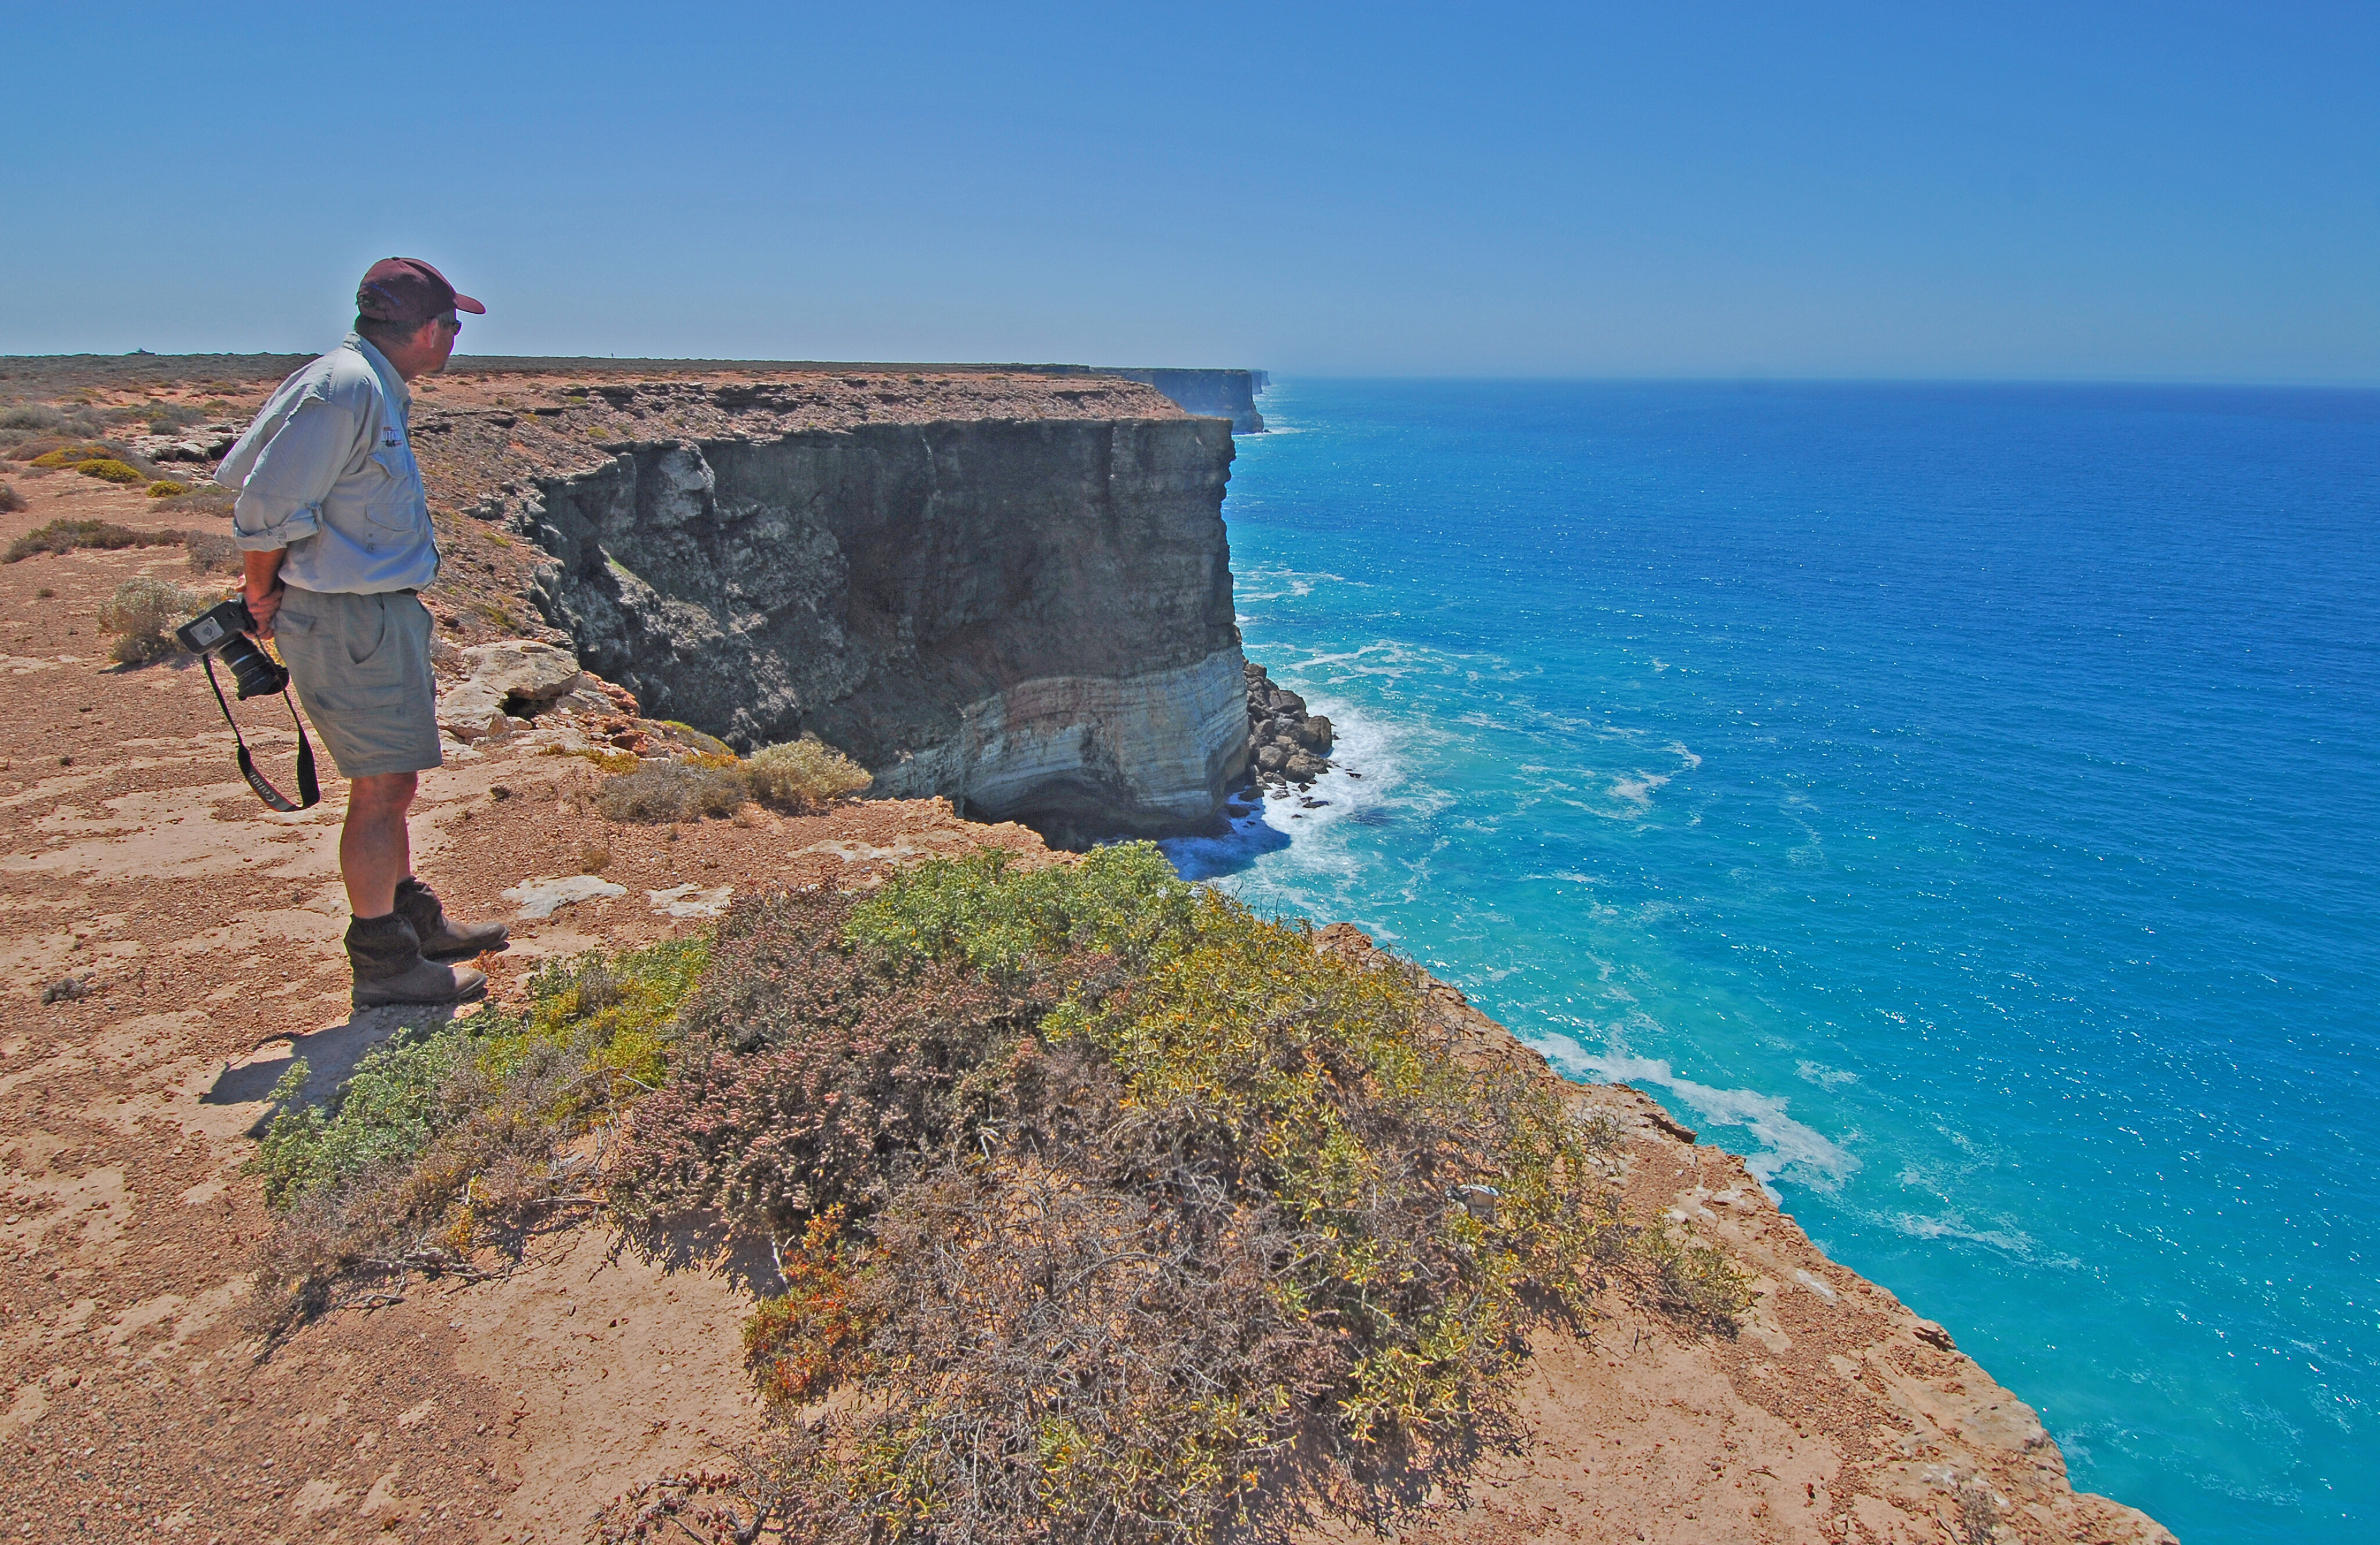 37d72841/ab018 bunda cliffs just south of main highway are spectacular 4x4 australia explore sa JPG